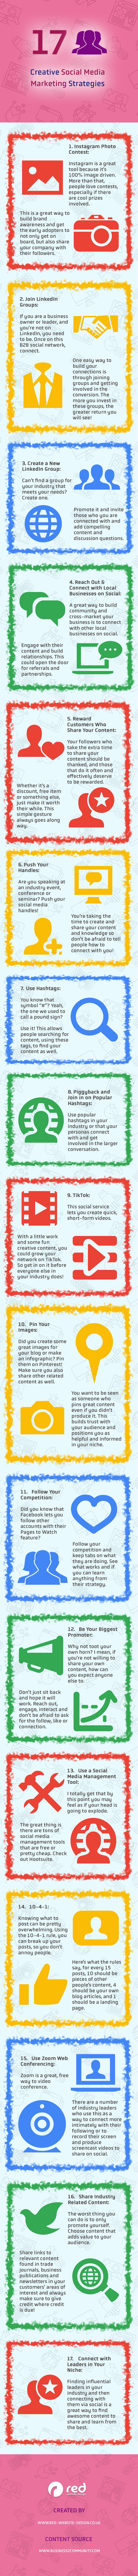 Infographic exploring Creative Social Media Marketing ideas